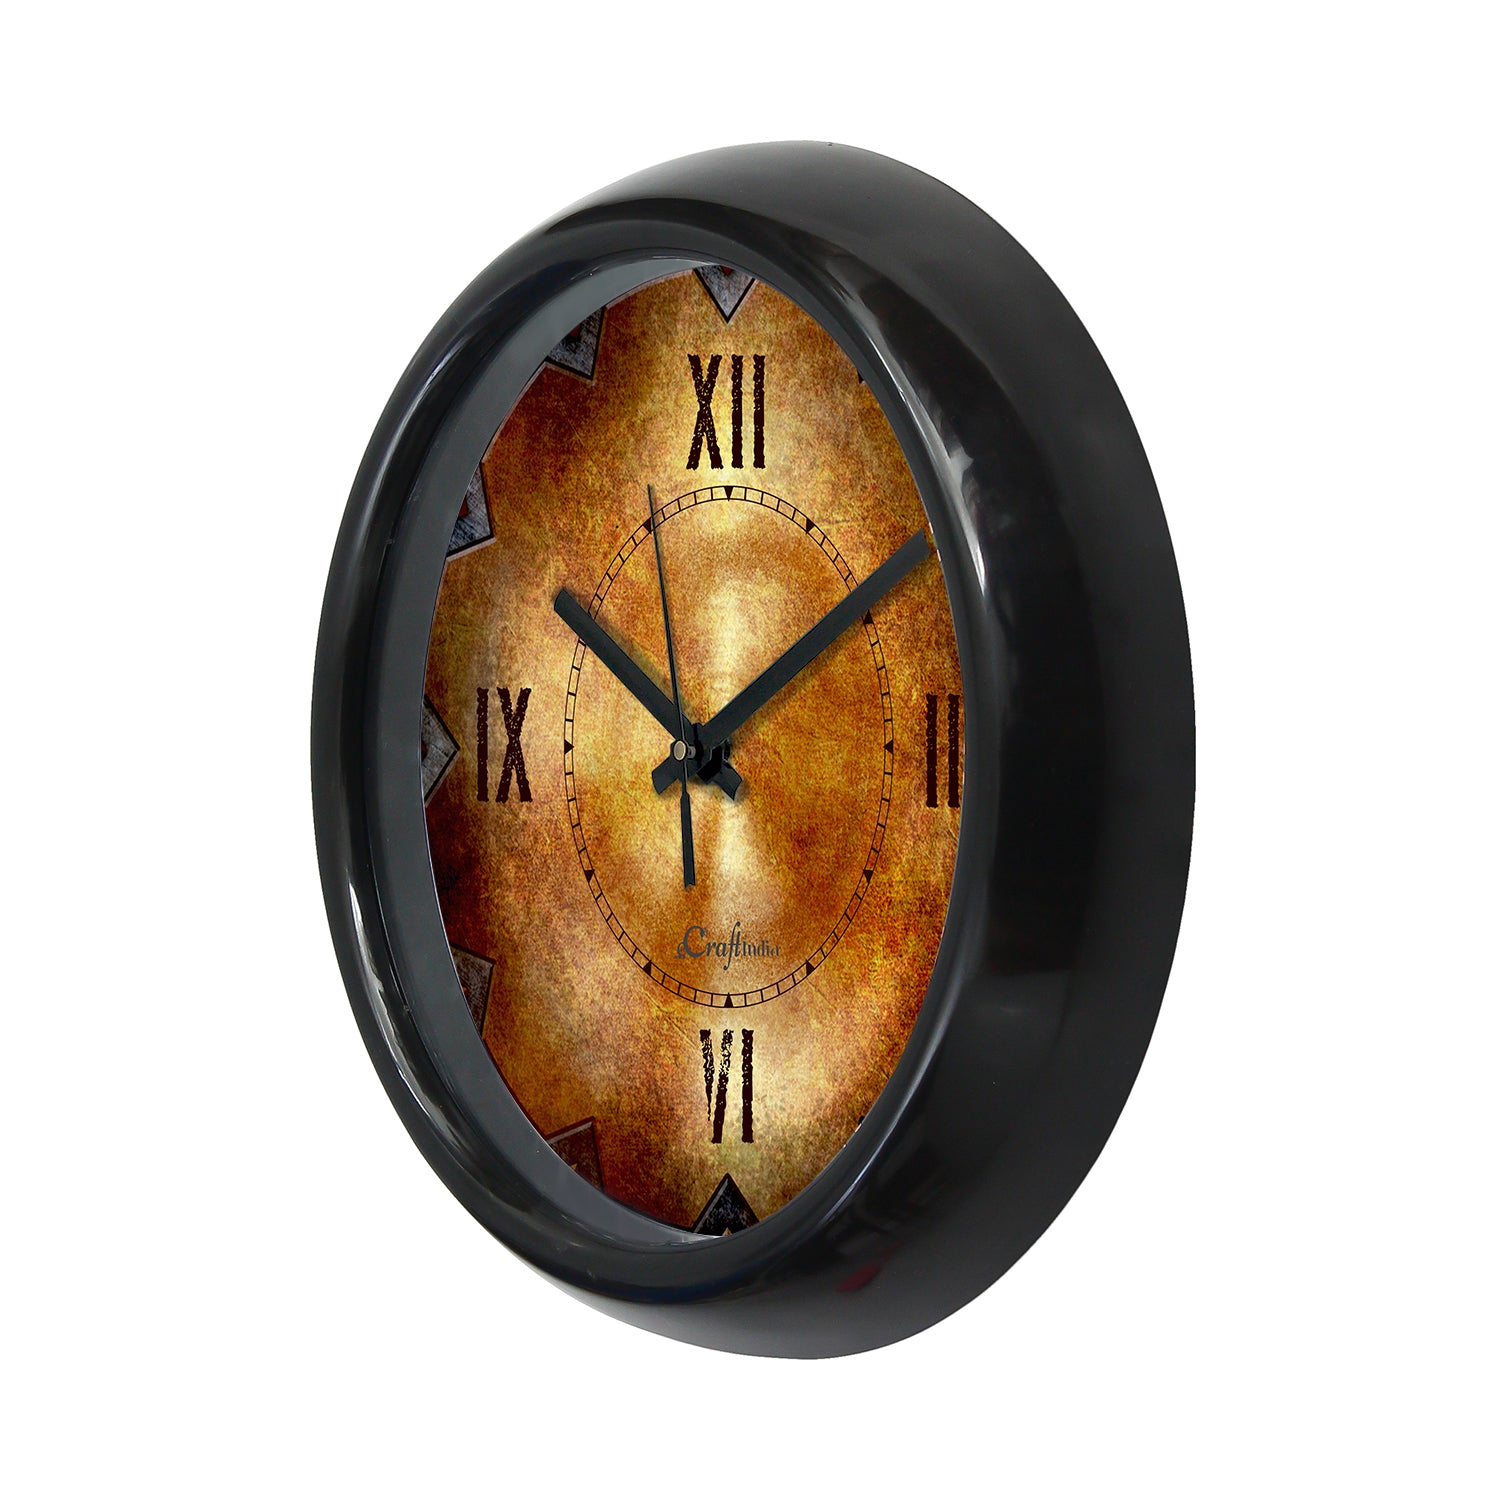 "Rustic Iron Look" Designer Round Analog Black Wall Clock 4